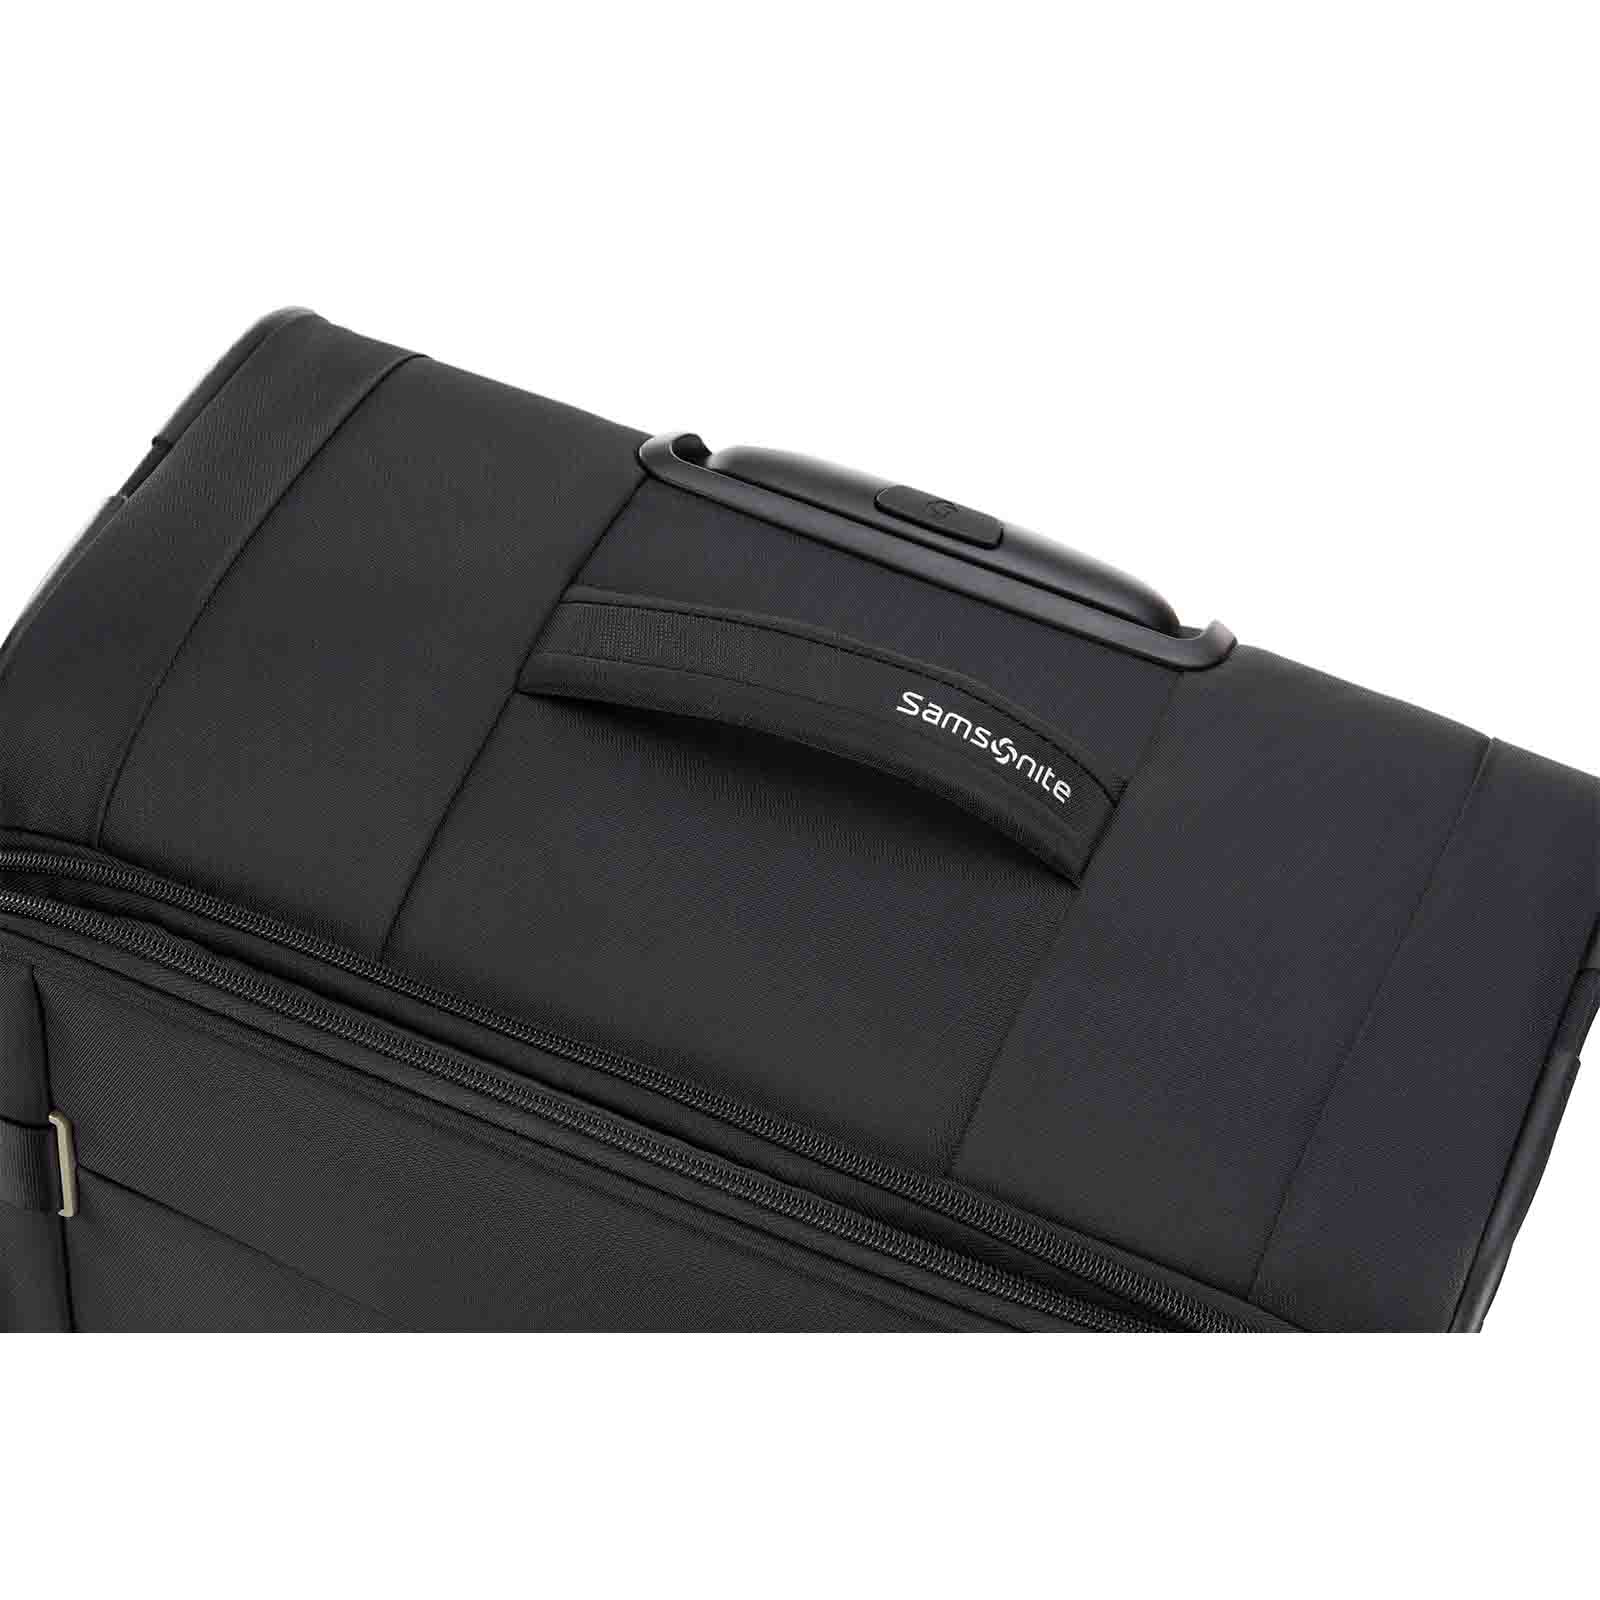 Samsonite-City-Rhythm-Carry-On-55cm-Suitcase-Black-Handle